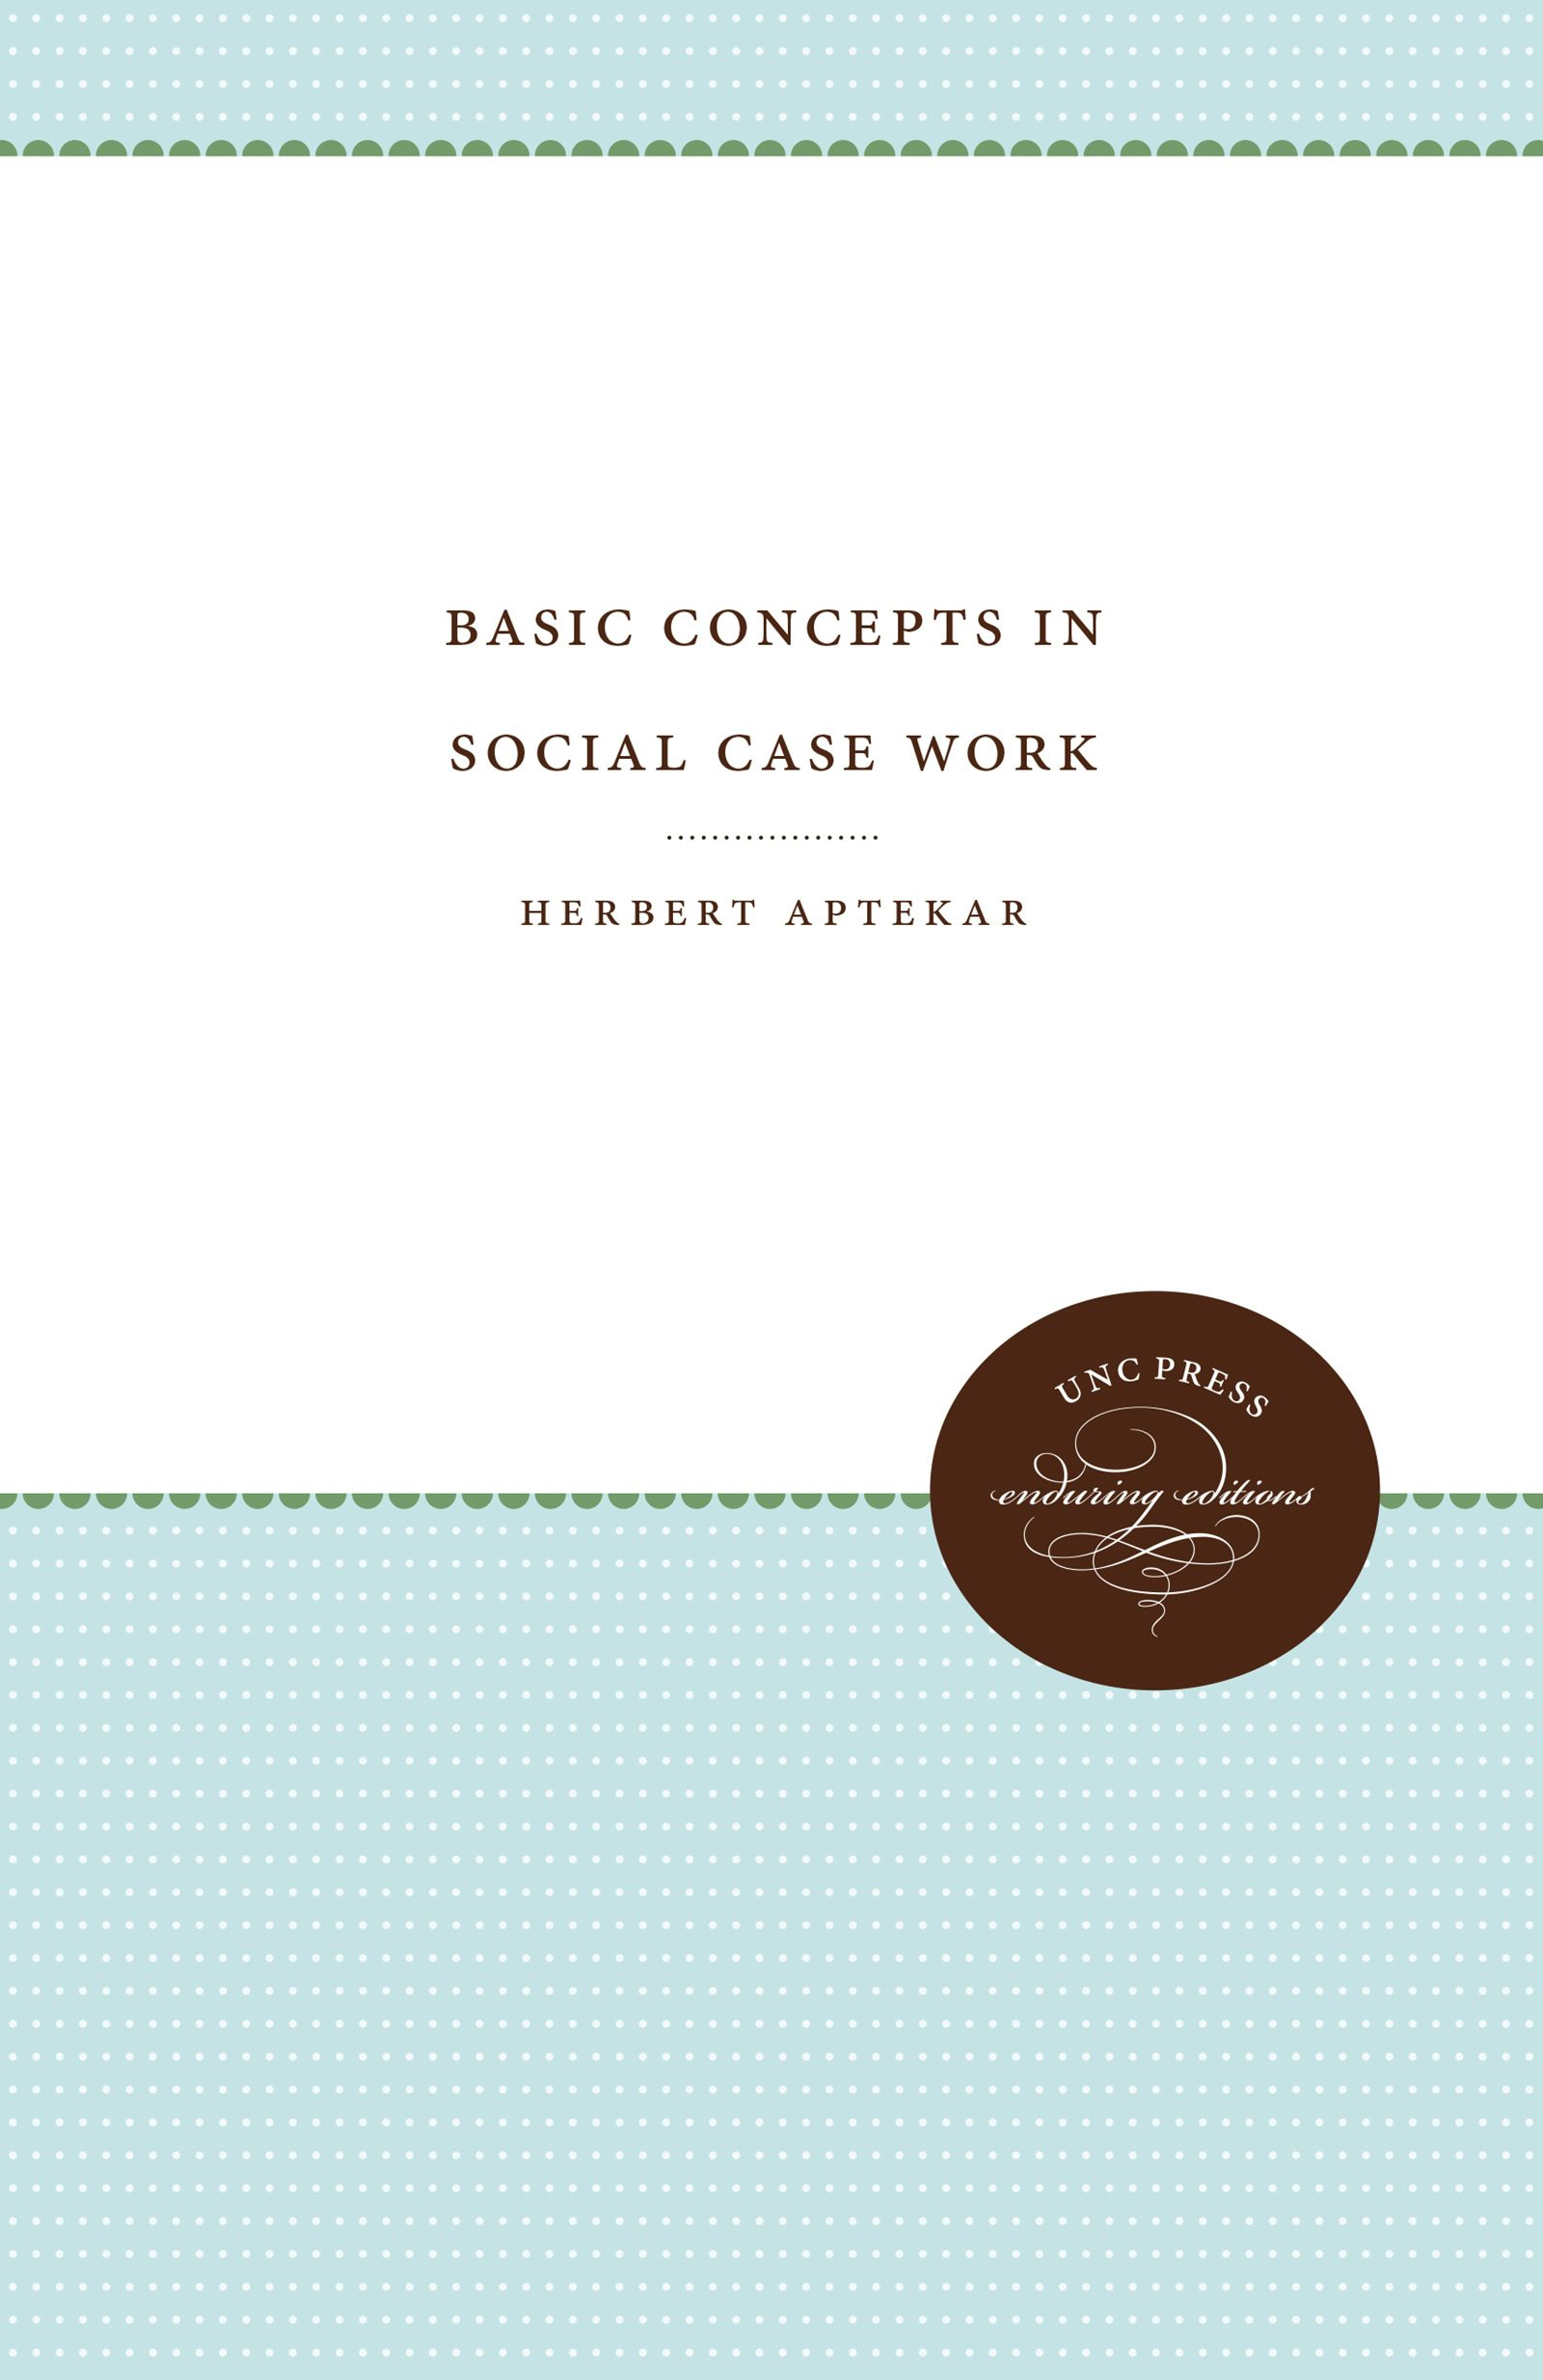 professional social work journal